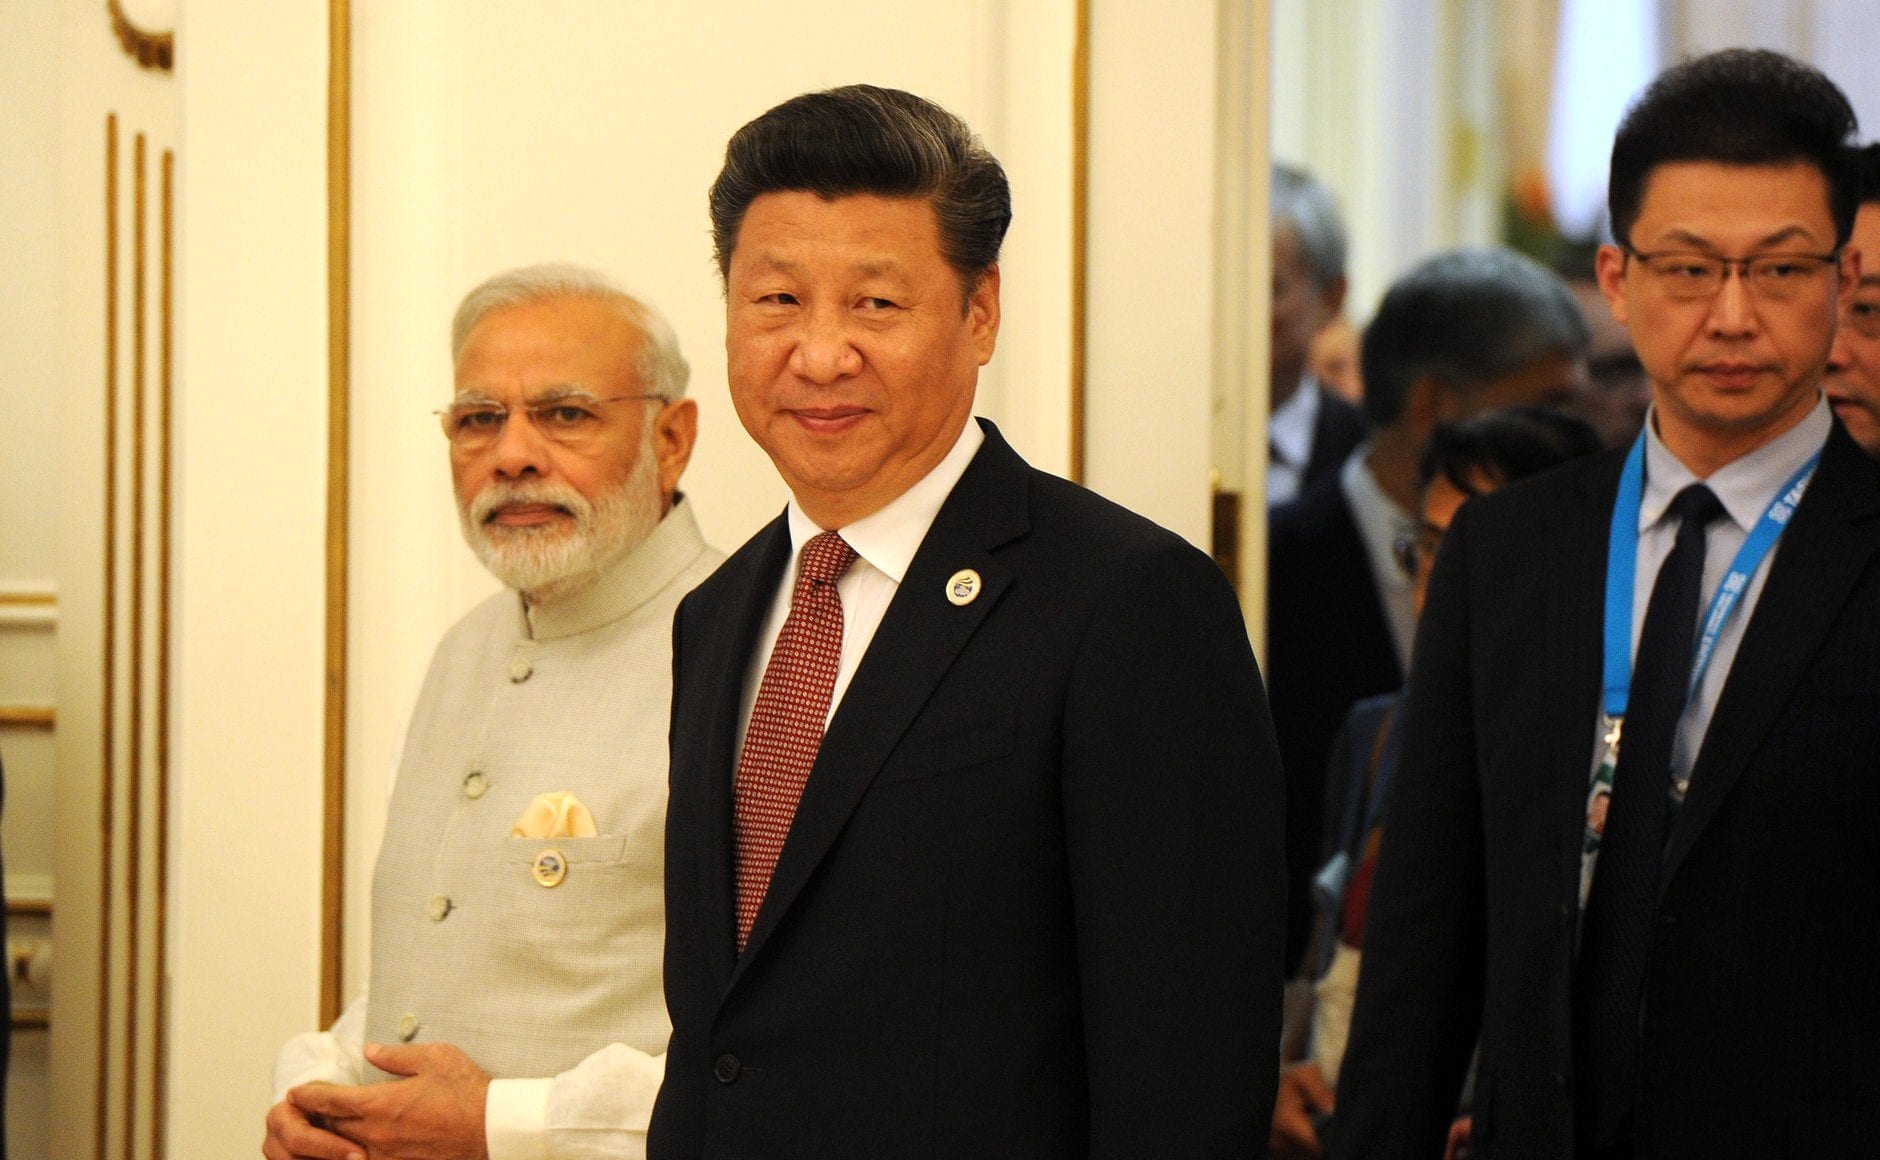 TN govt seeks HC nod to erect banners for Modi, Xi Jinping visit